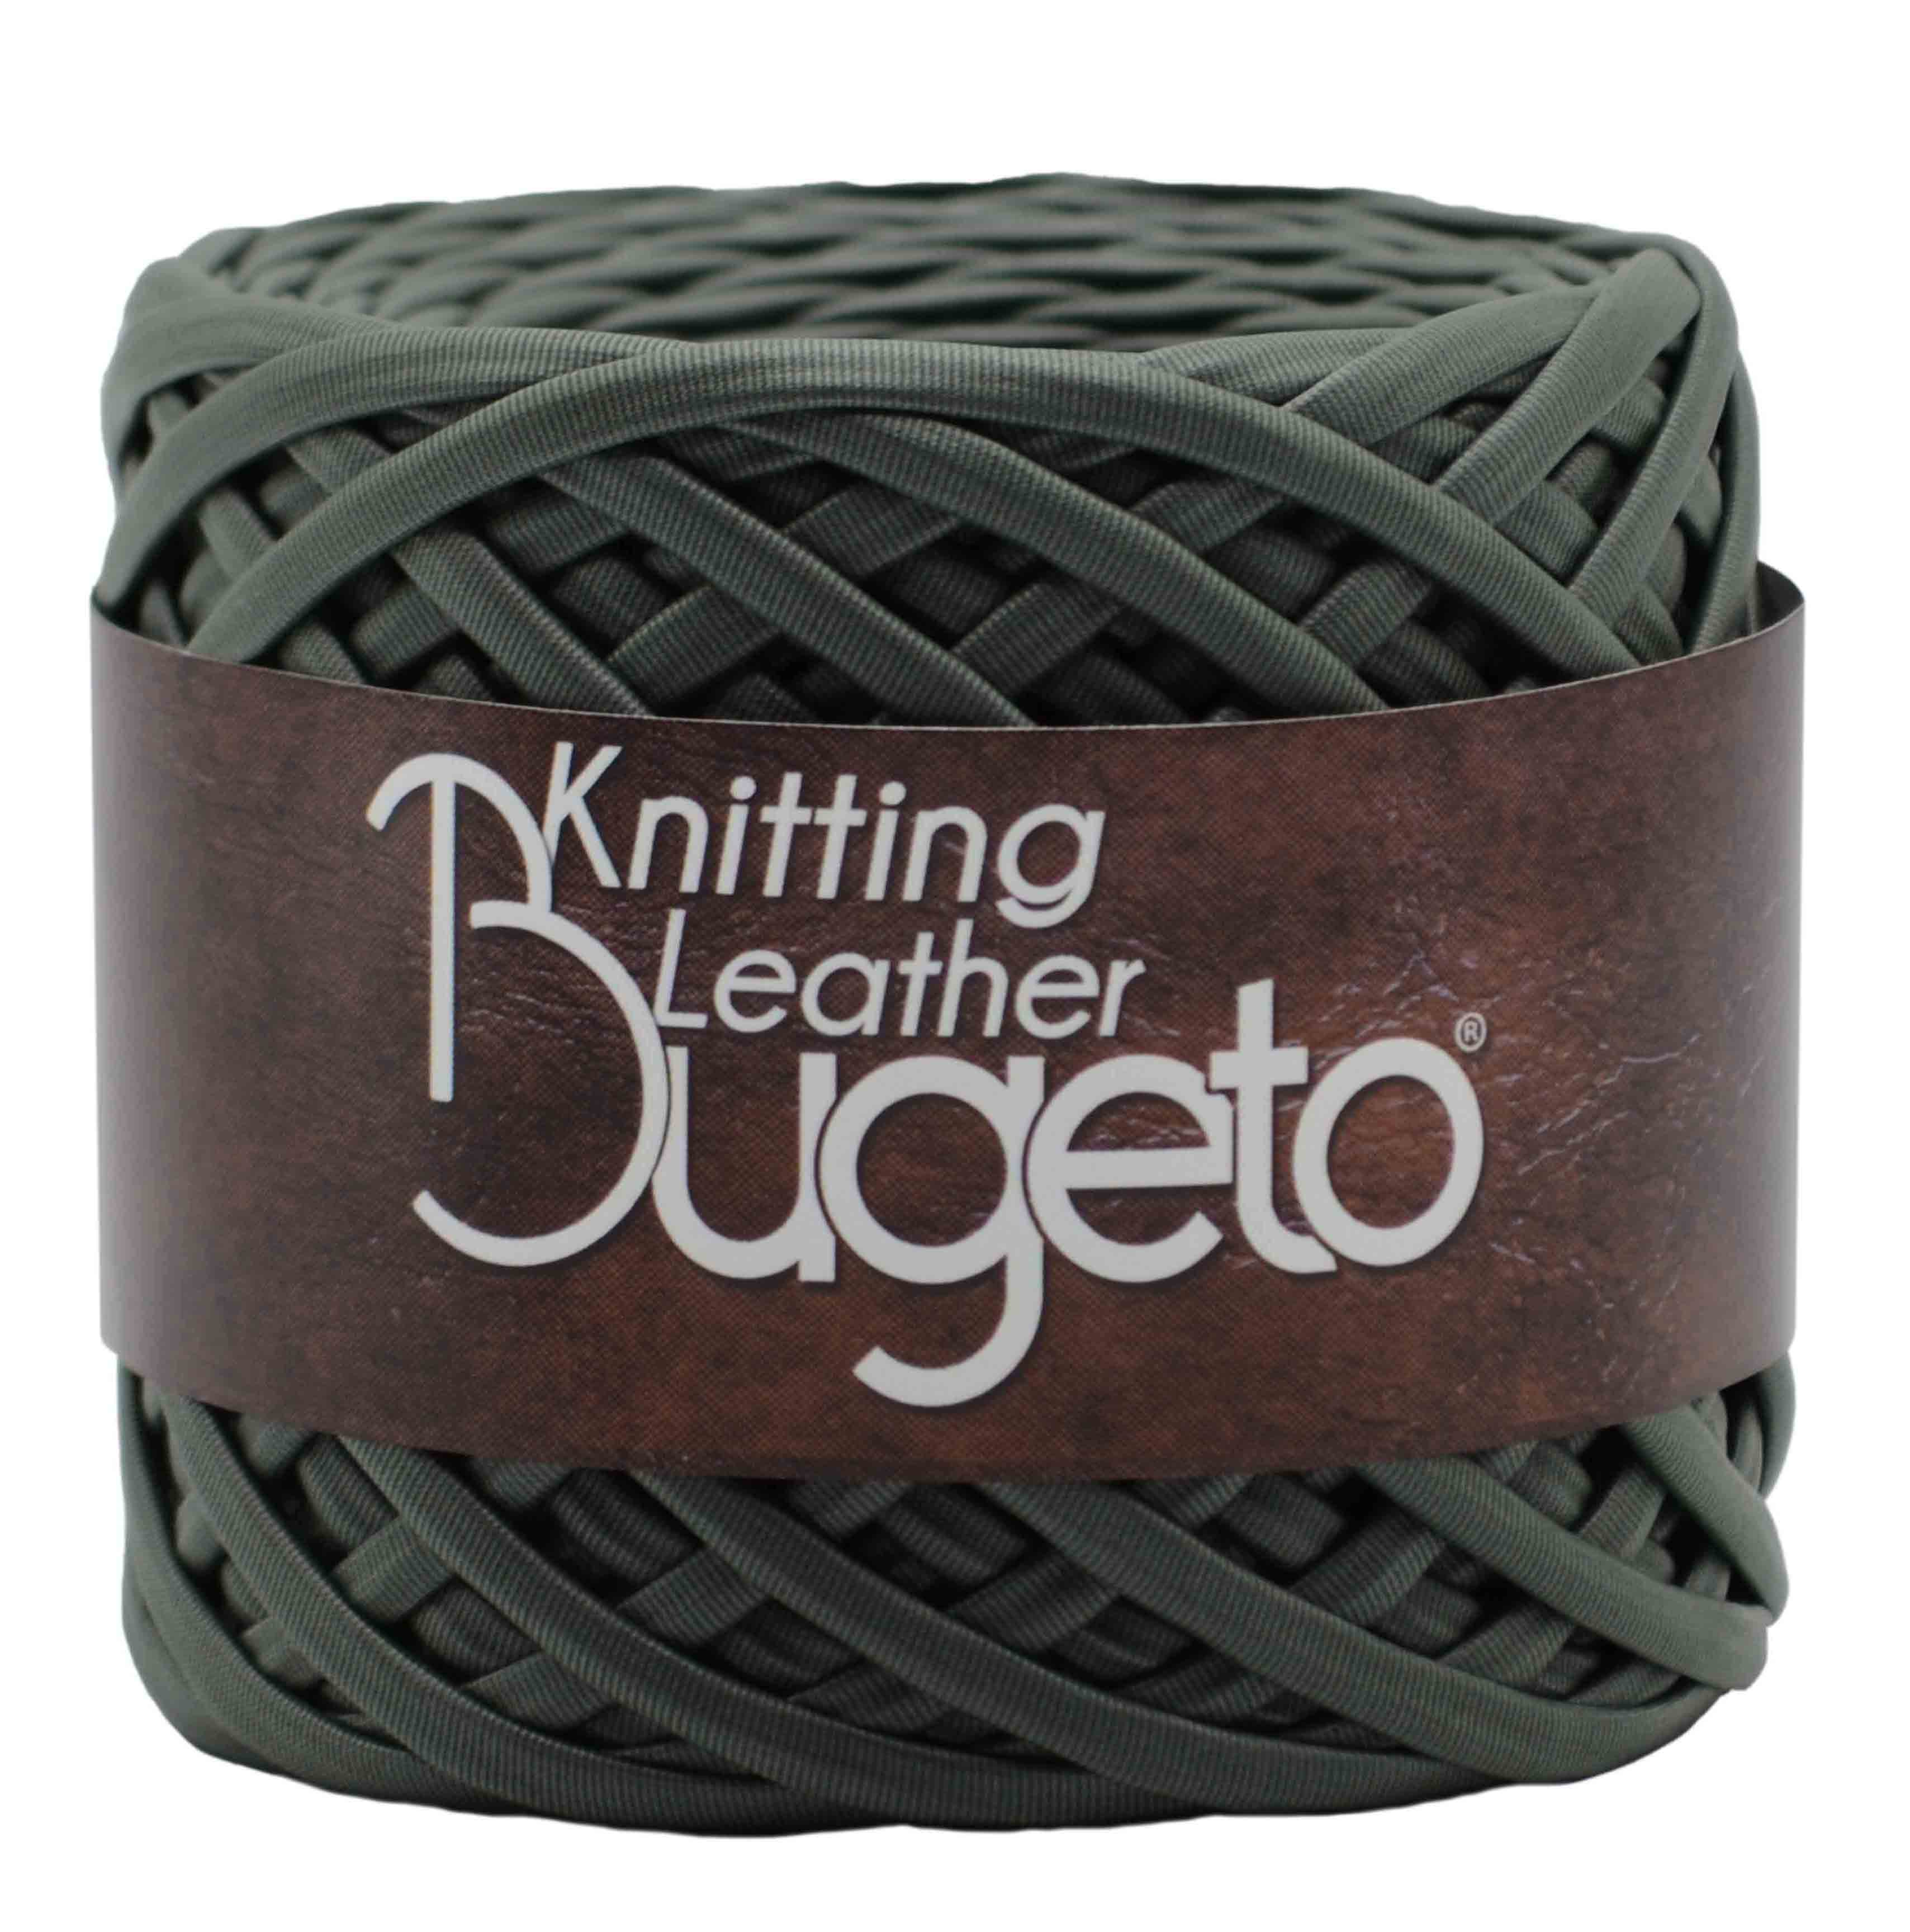 leather look like yarn leather yarn knitting leather yarns bugeto yarn